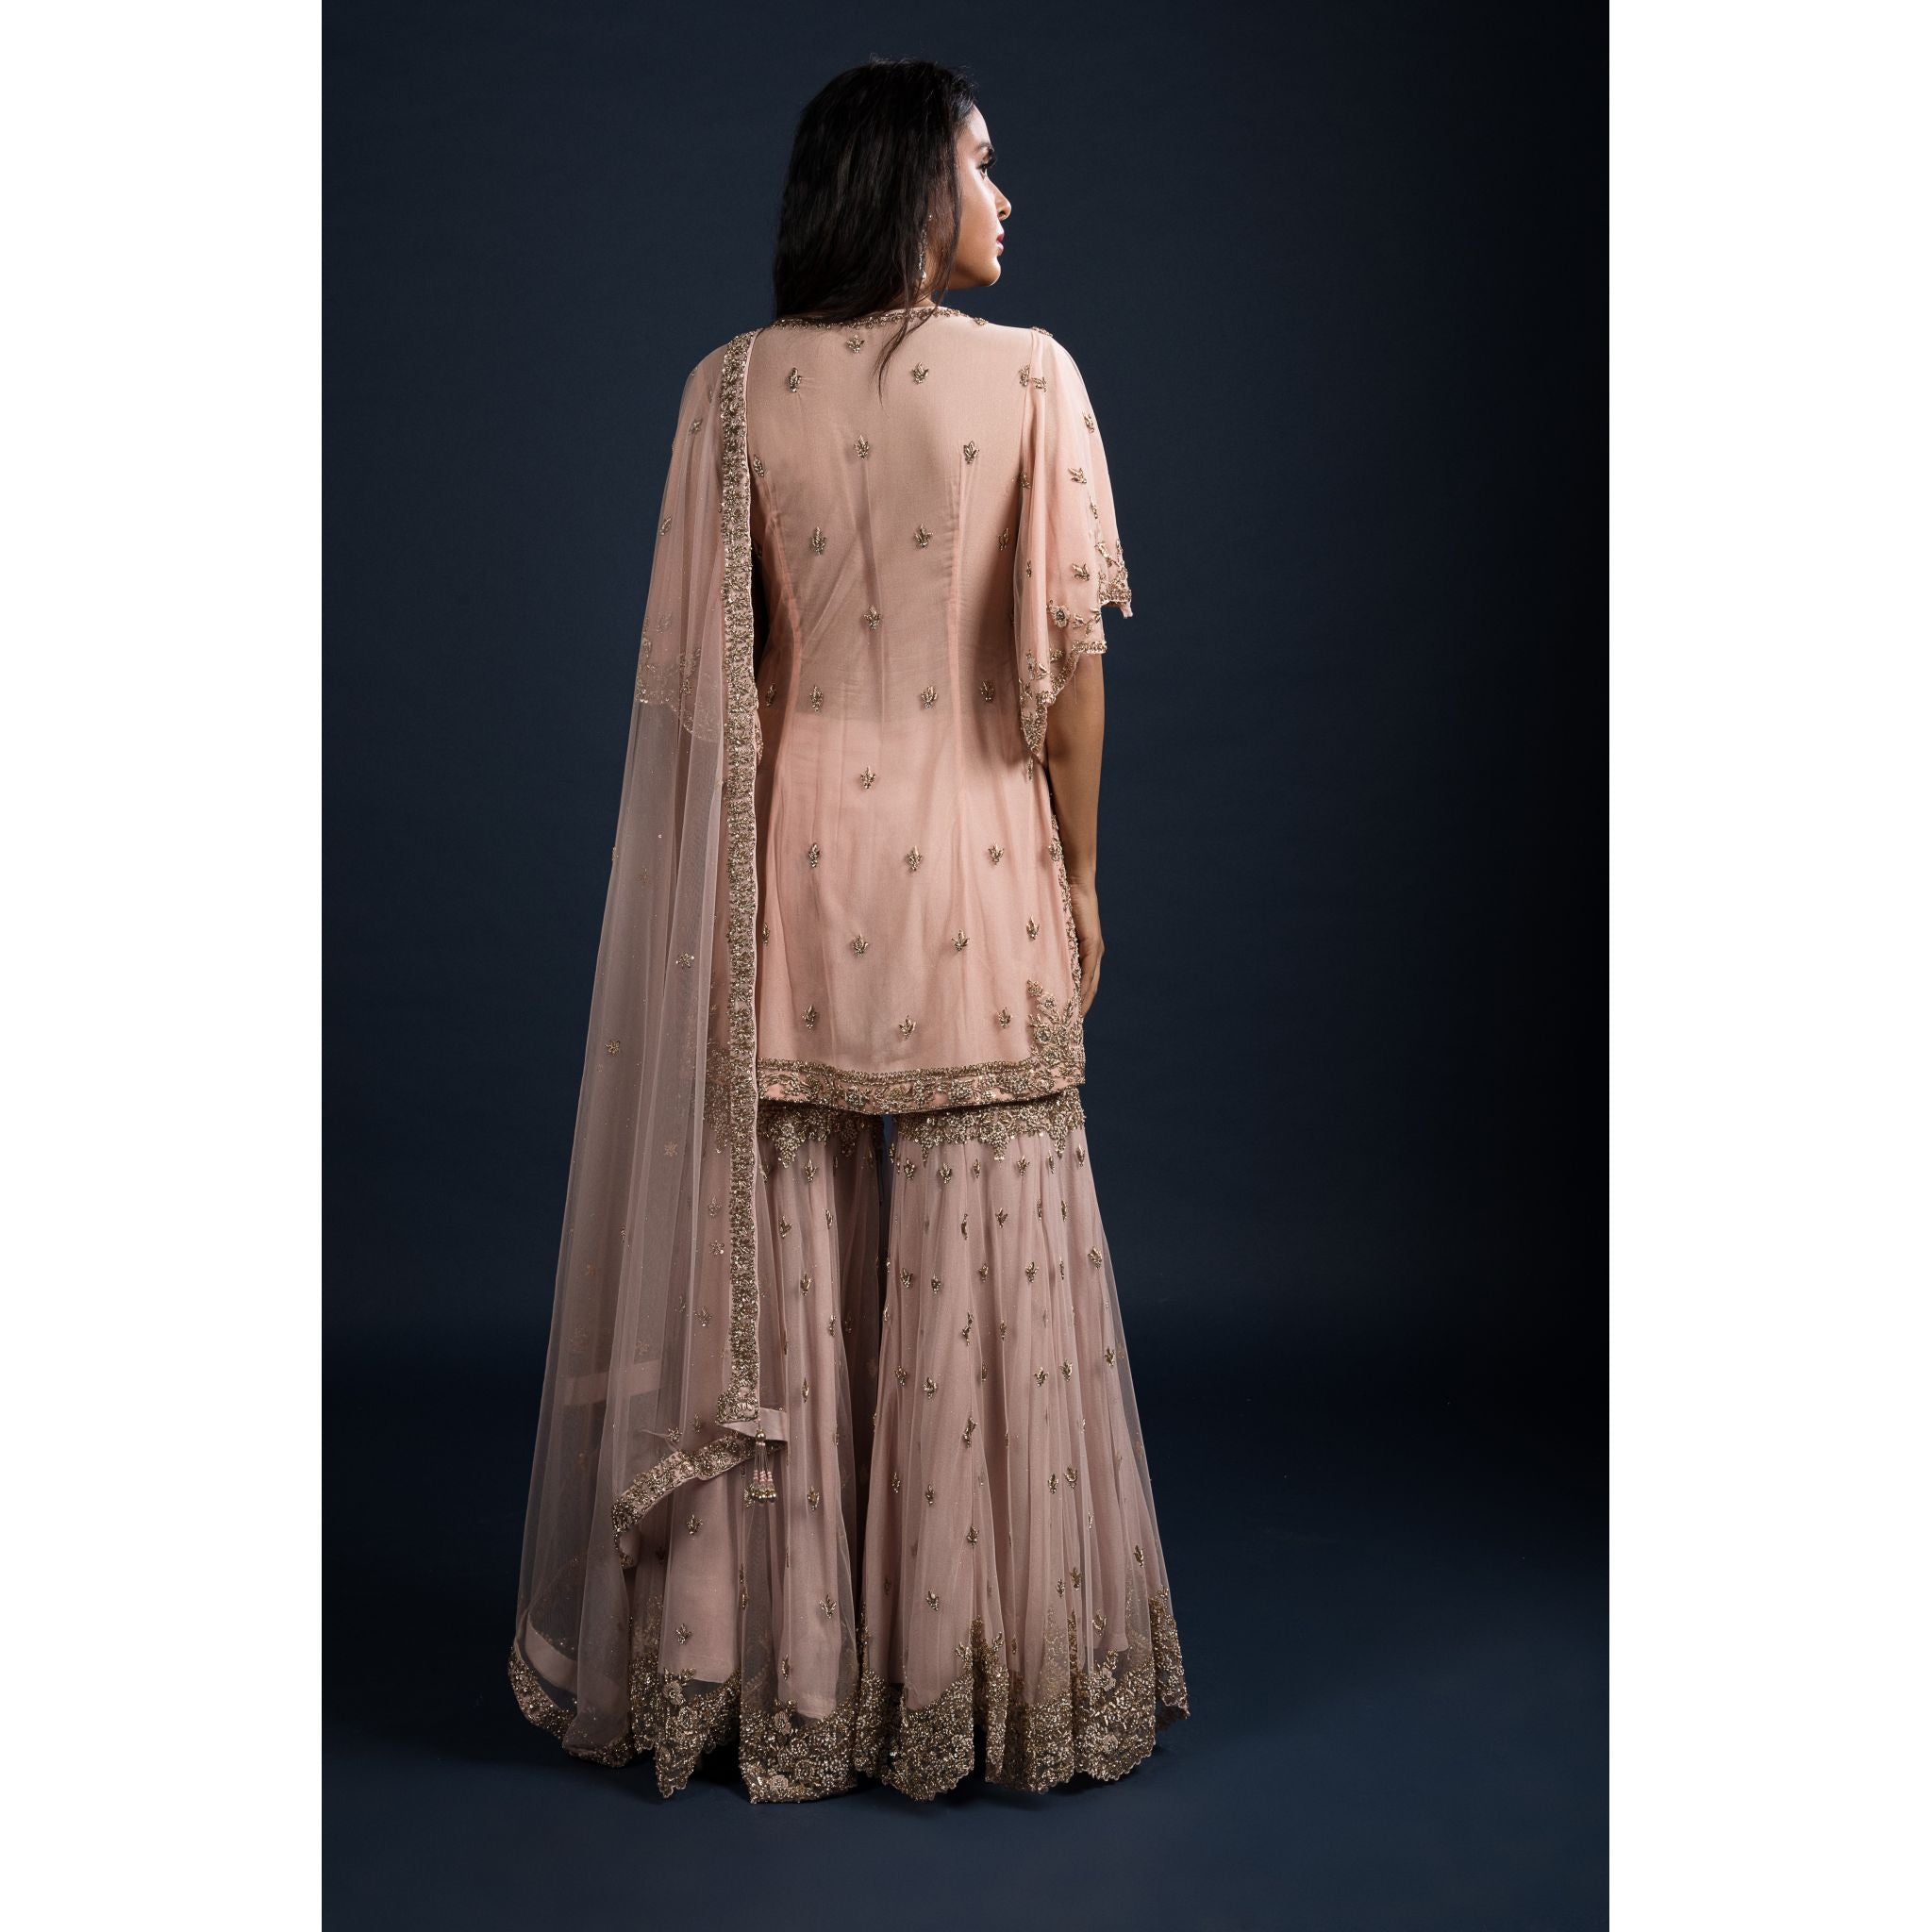 Peach Gold Sharara Set - Indian Designer Bridal Wedding Outfit